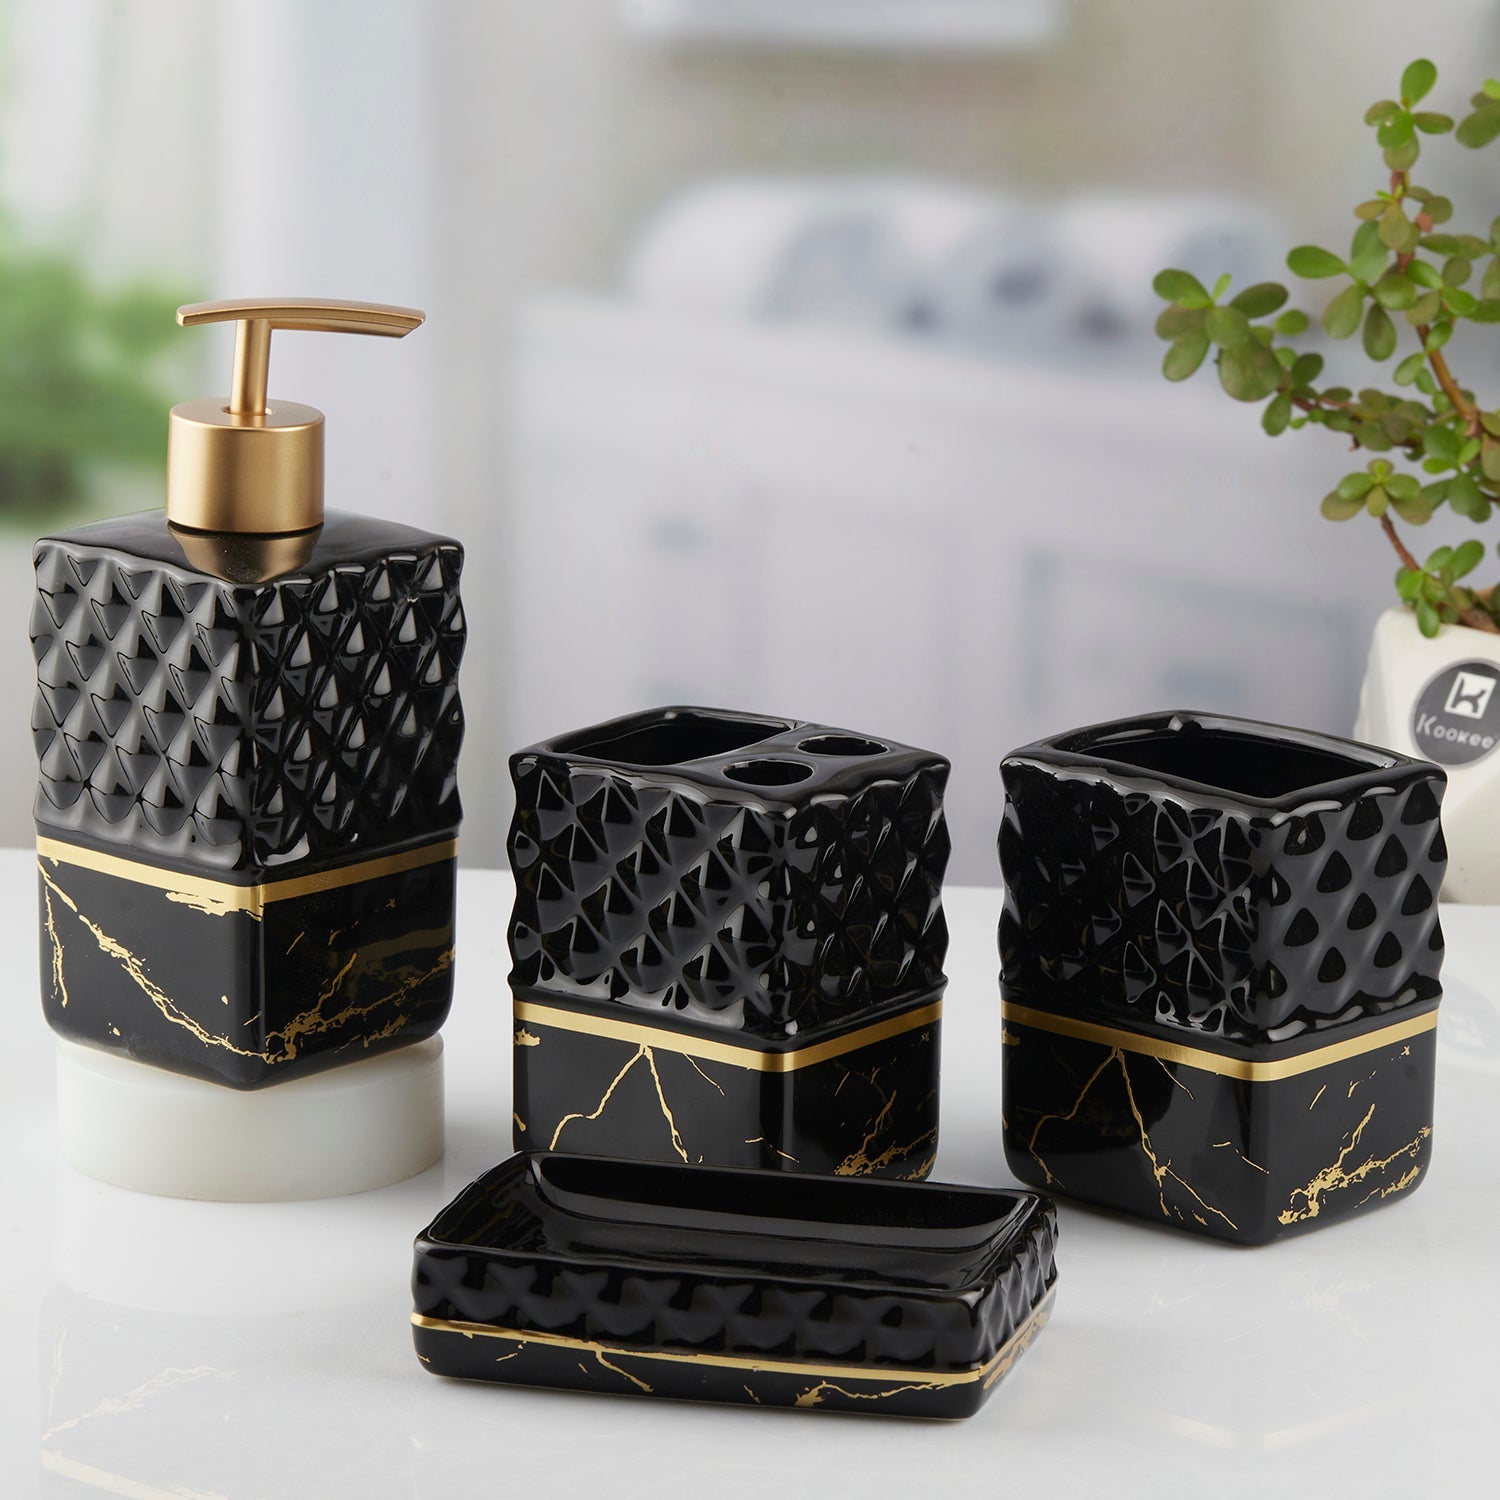 Ceramic Bathroom Accessories Set of 4 Bath Set with Soap Dispenser (10097)